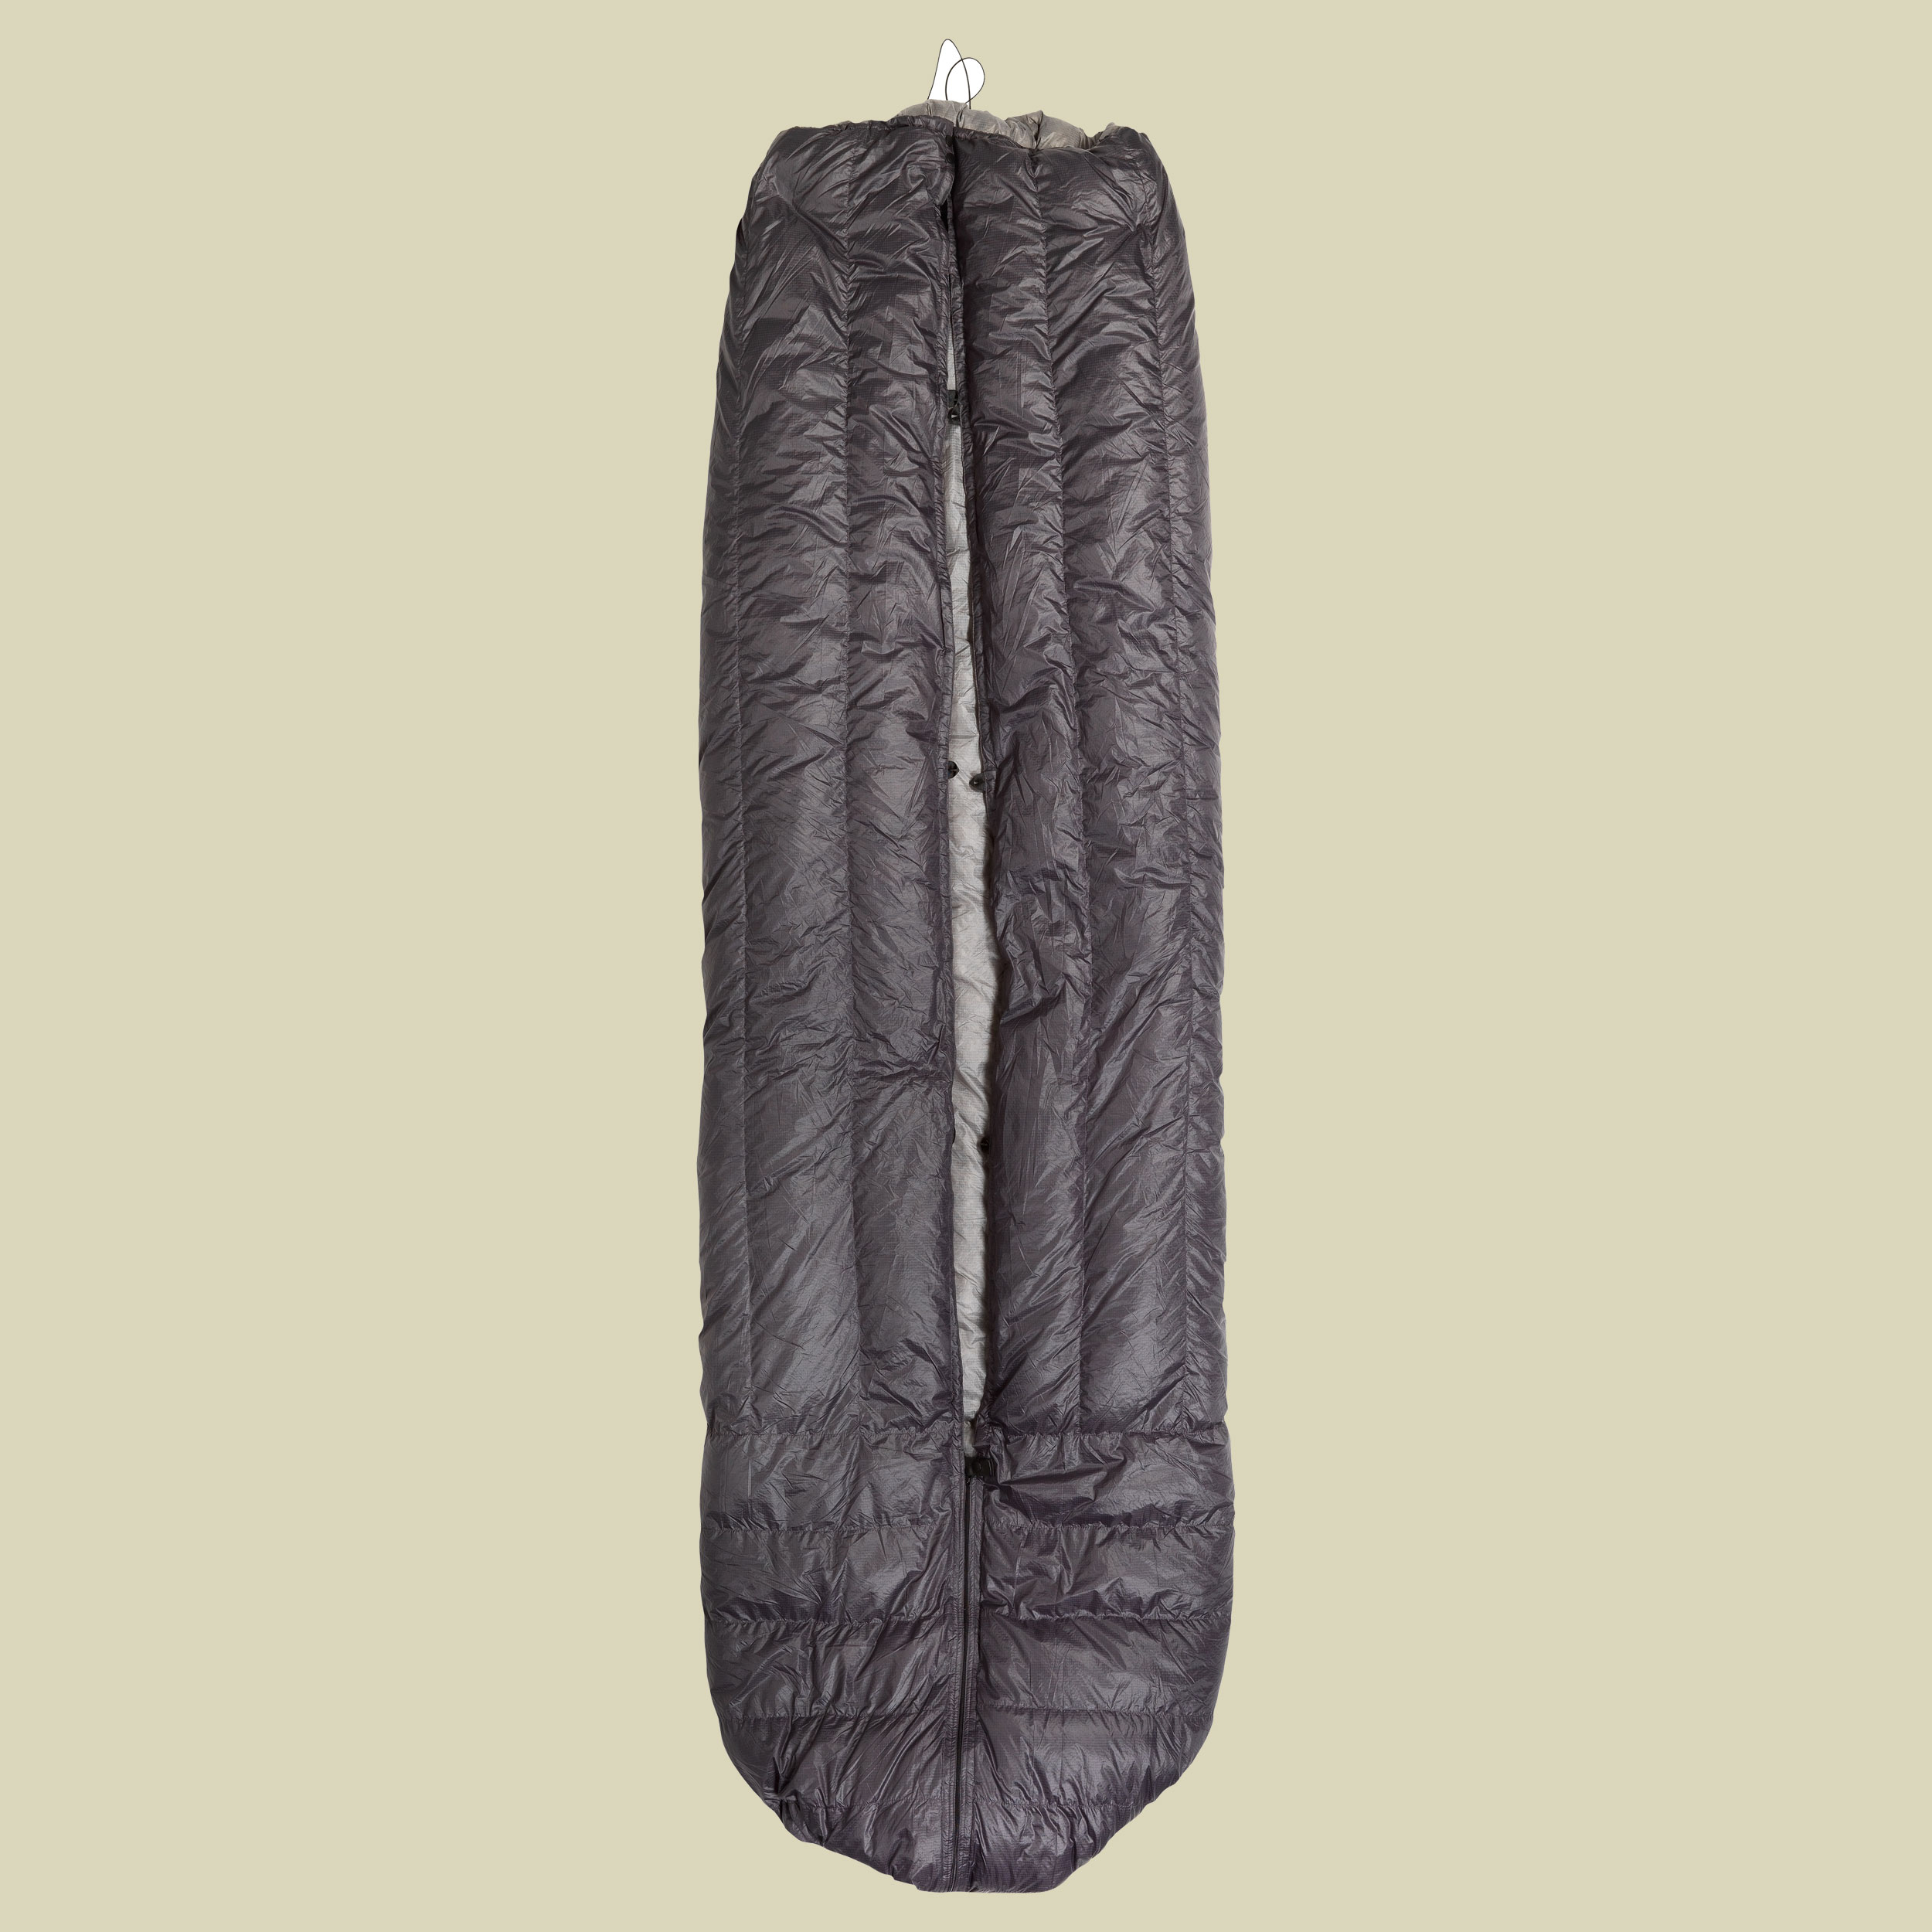 Hammock Top Quilt Down Maße: 210 x 135 cm Farbe: tempest gray/ silverbird